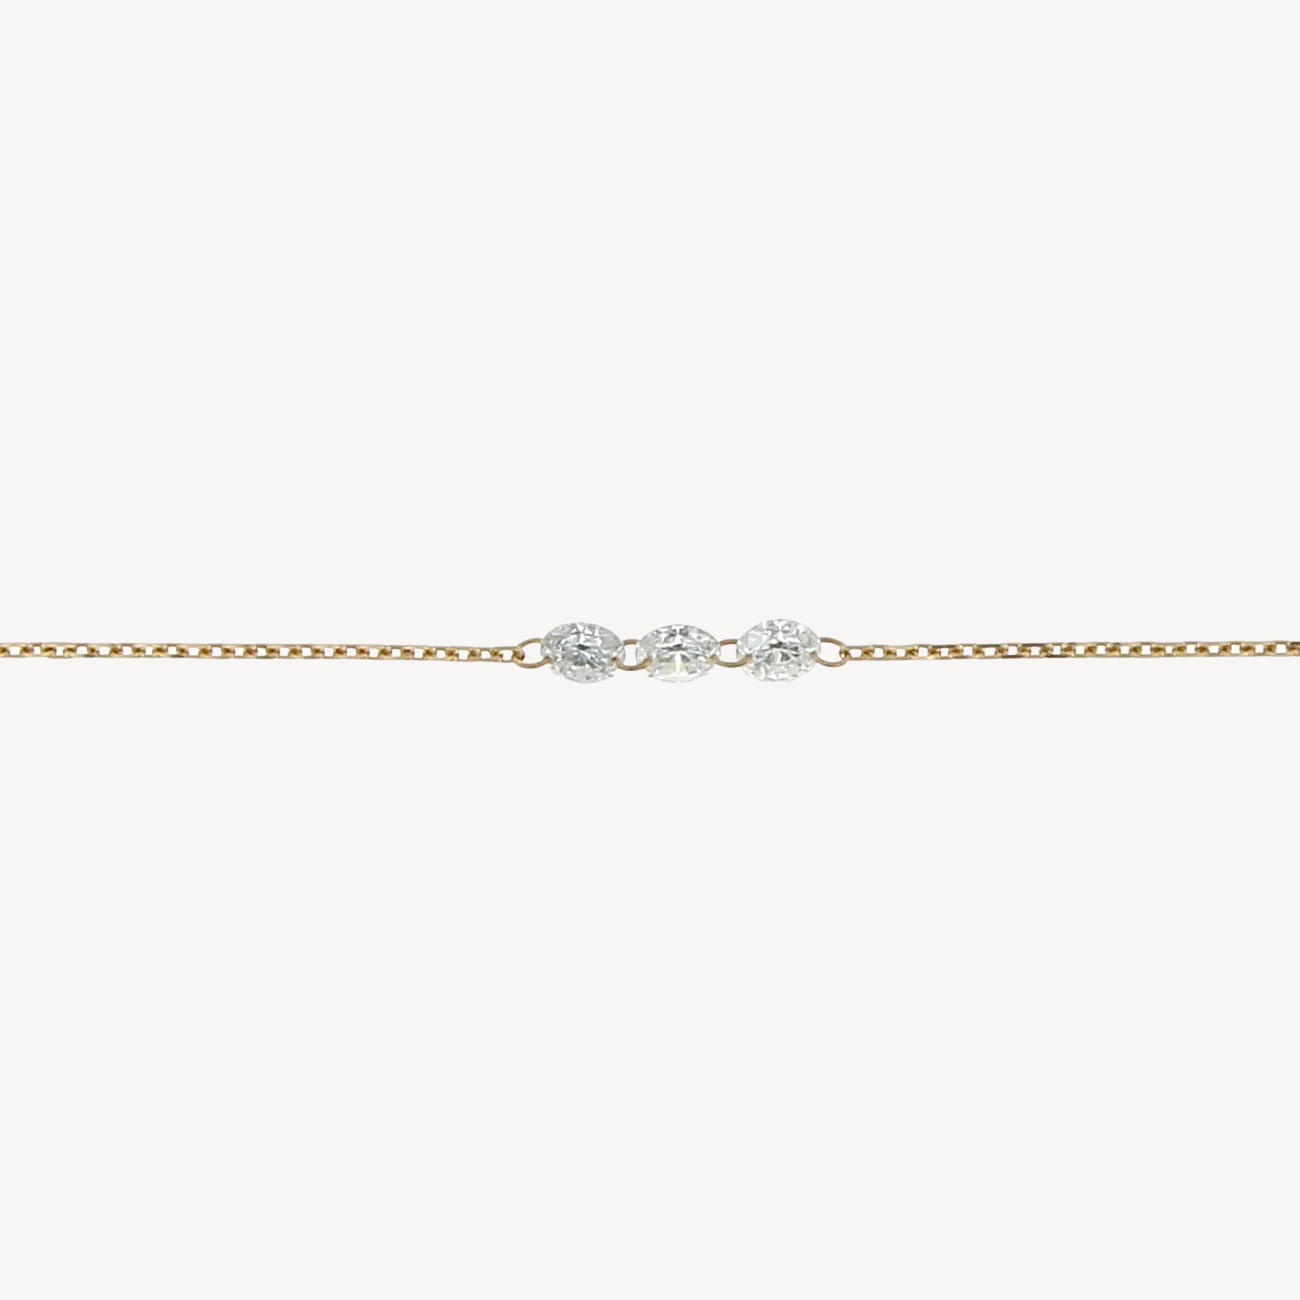 Bracelet diamond encrusted rose gold 3.5mm